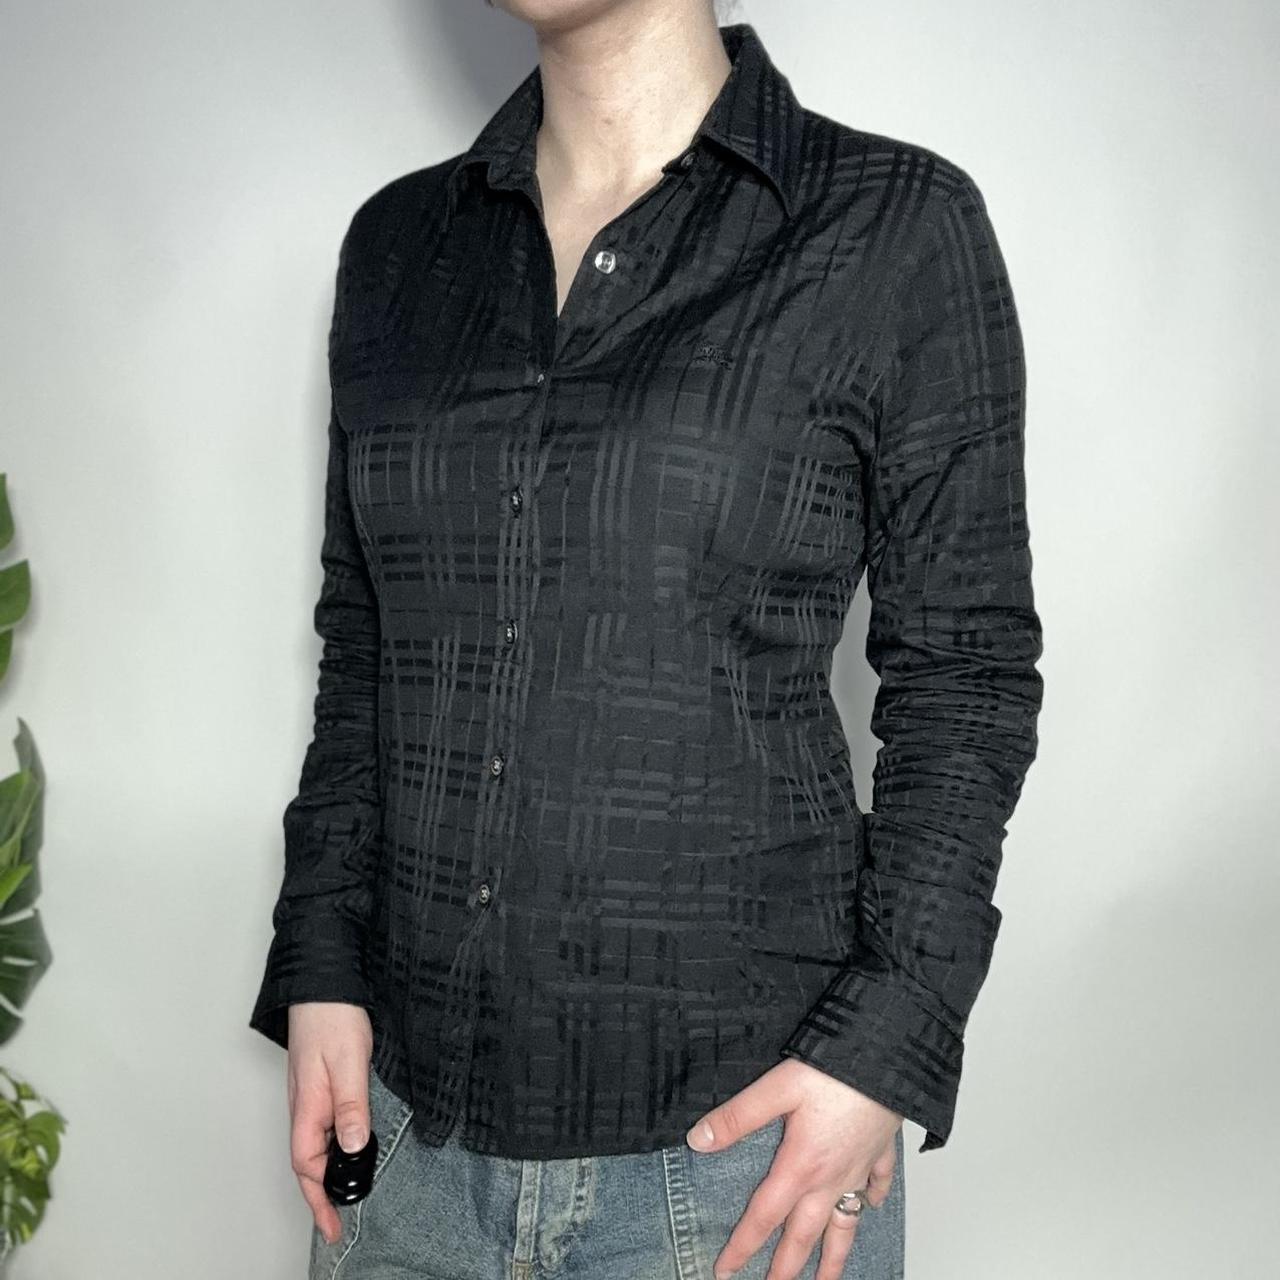 Tekstforfatter heroin komplikationer Vintage 90s Burberry black checked shirt | Shapiro Selective